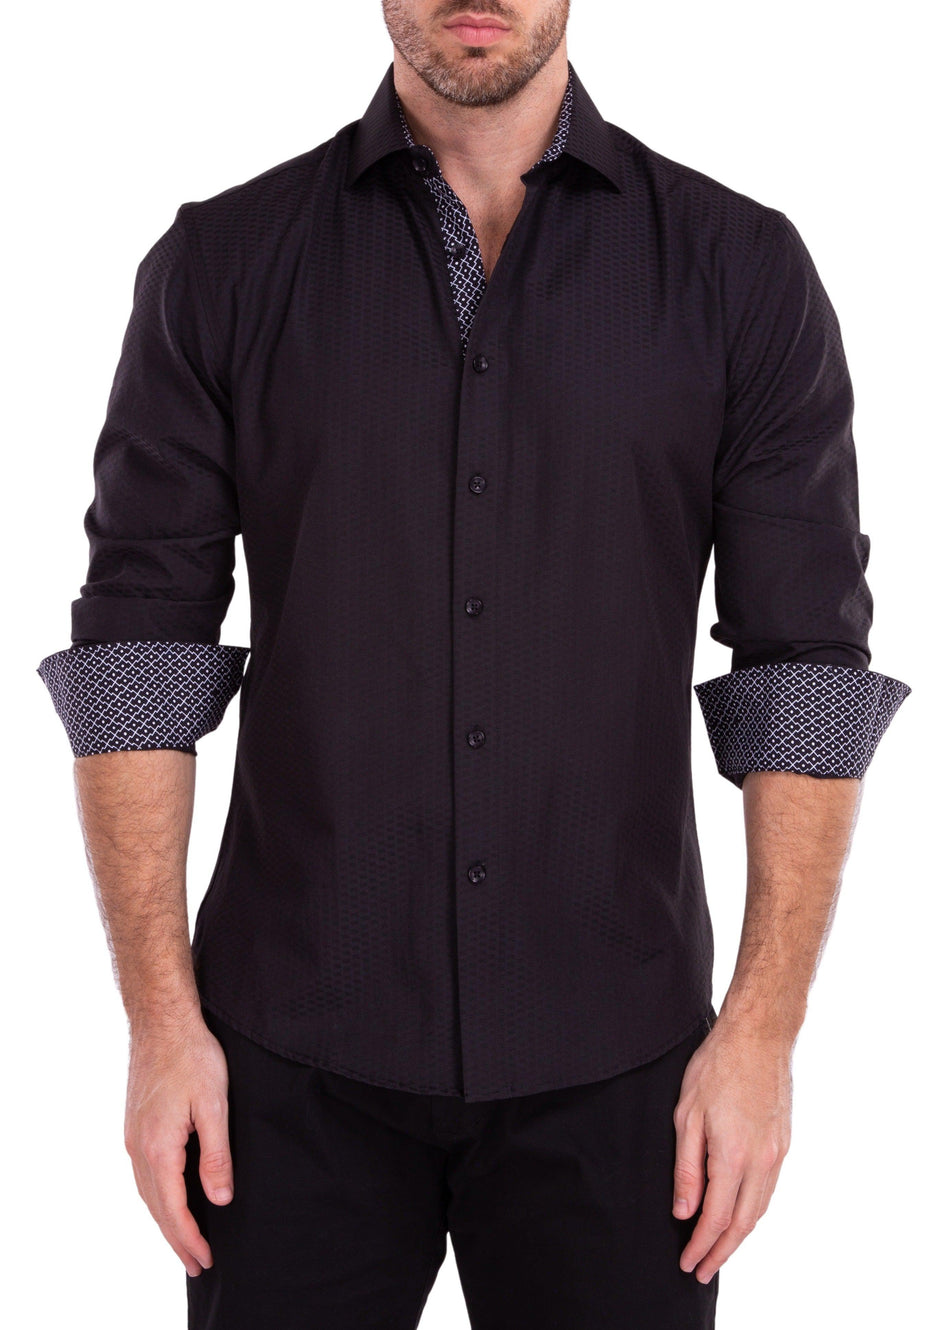 Geometric Texture Solid Black Button Up Long Sleeve Dress Shirt